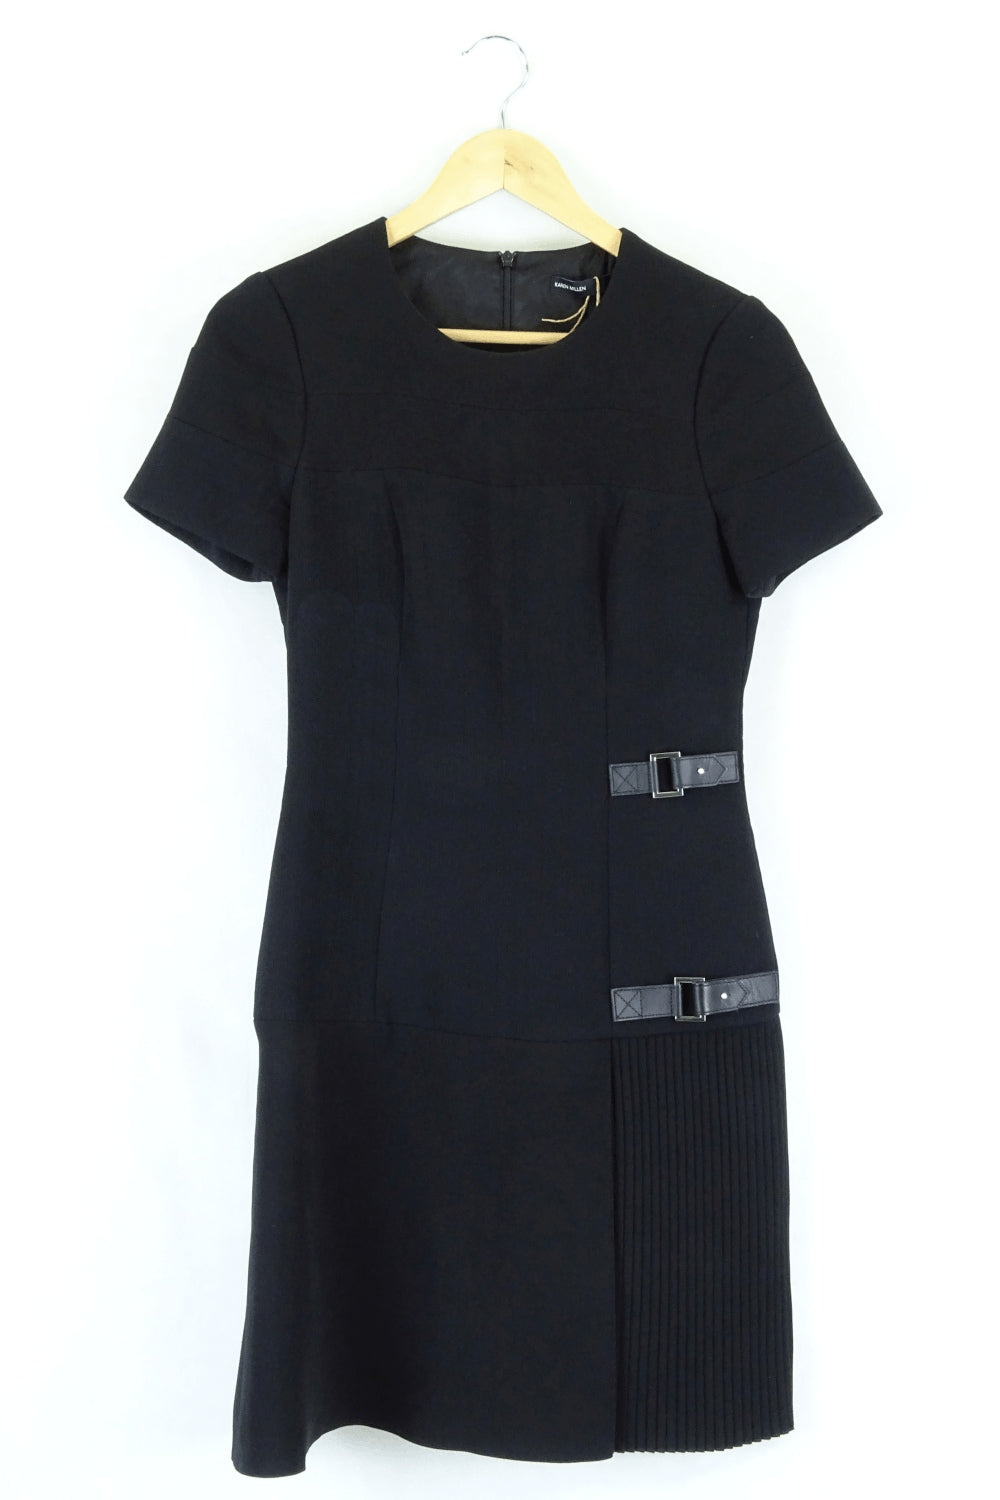 Karen Millen 'Military' Black Dress 10